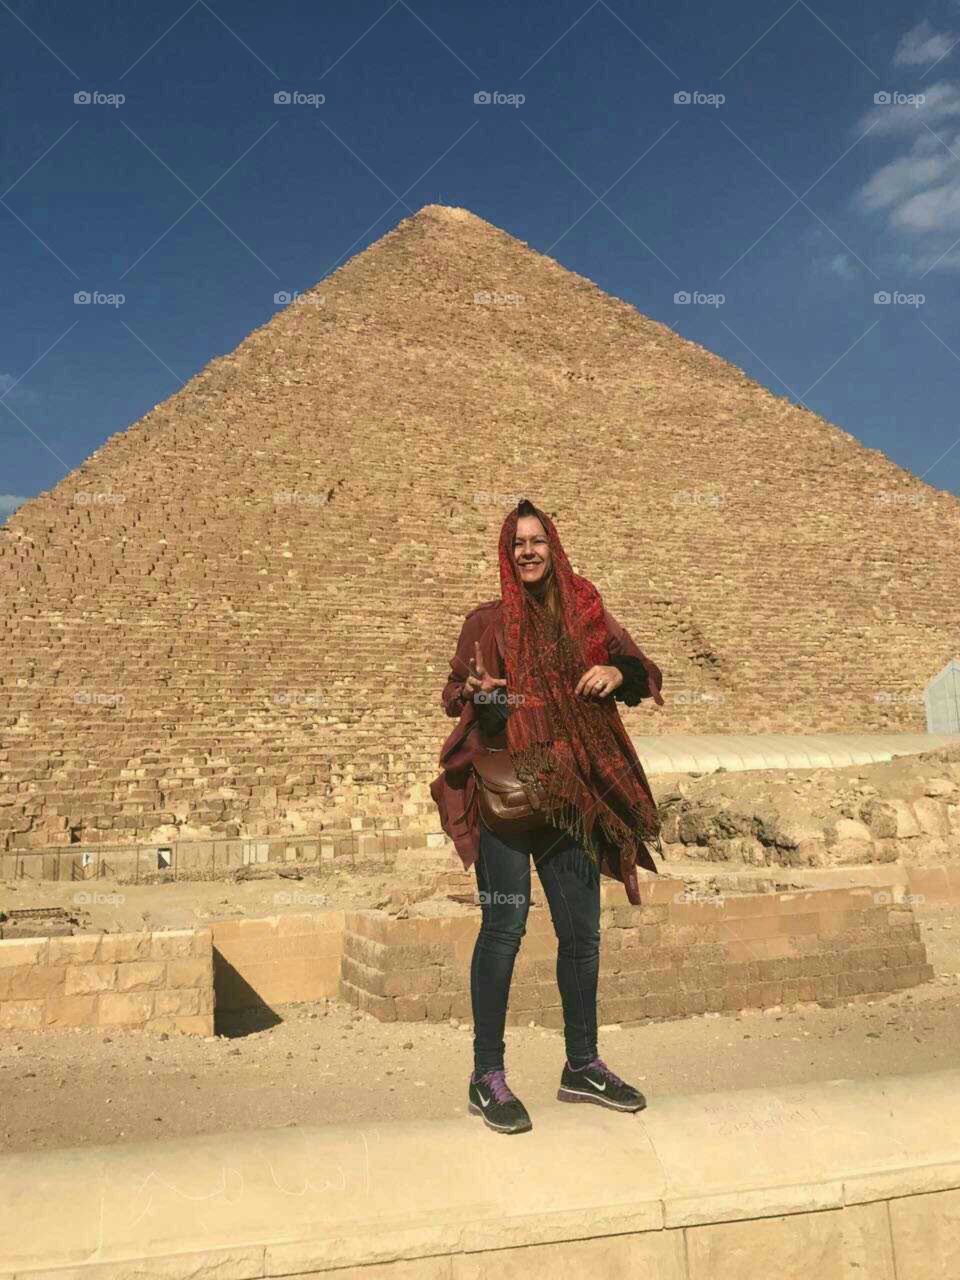 Pyramid, Desert, Travel, Pharaoh, Adult